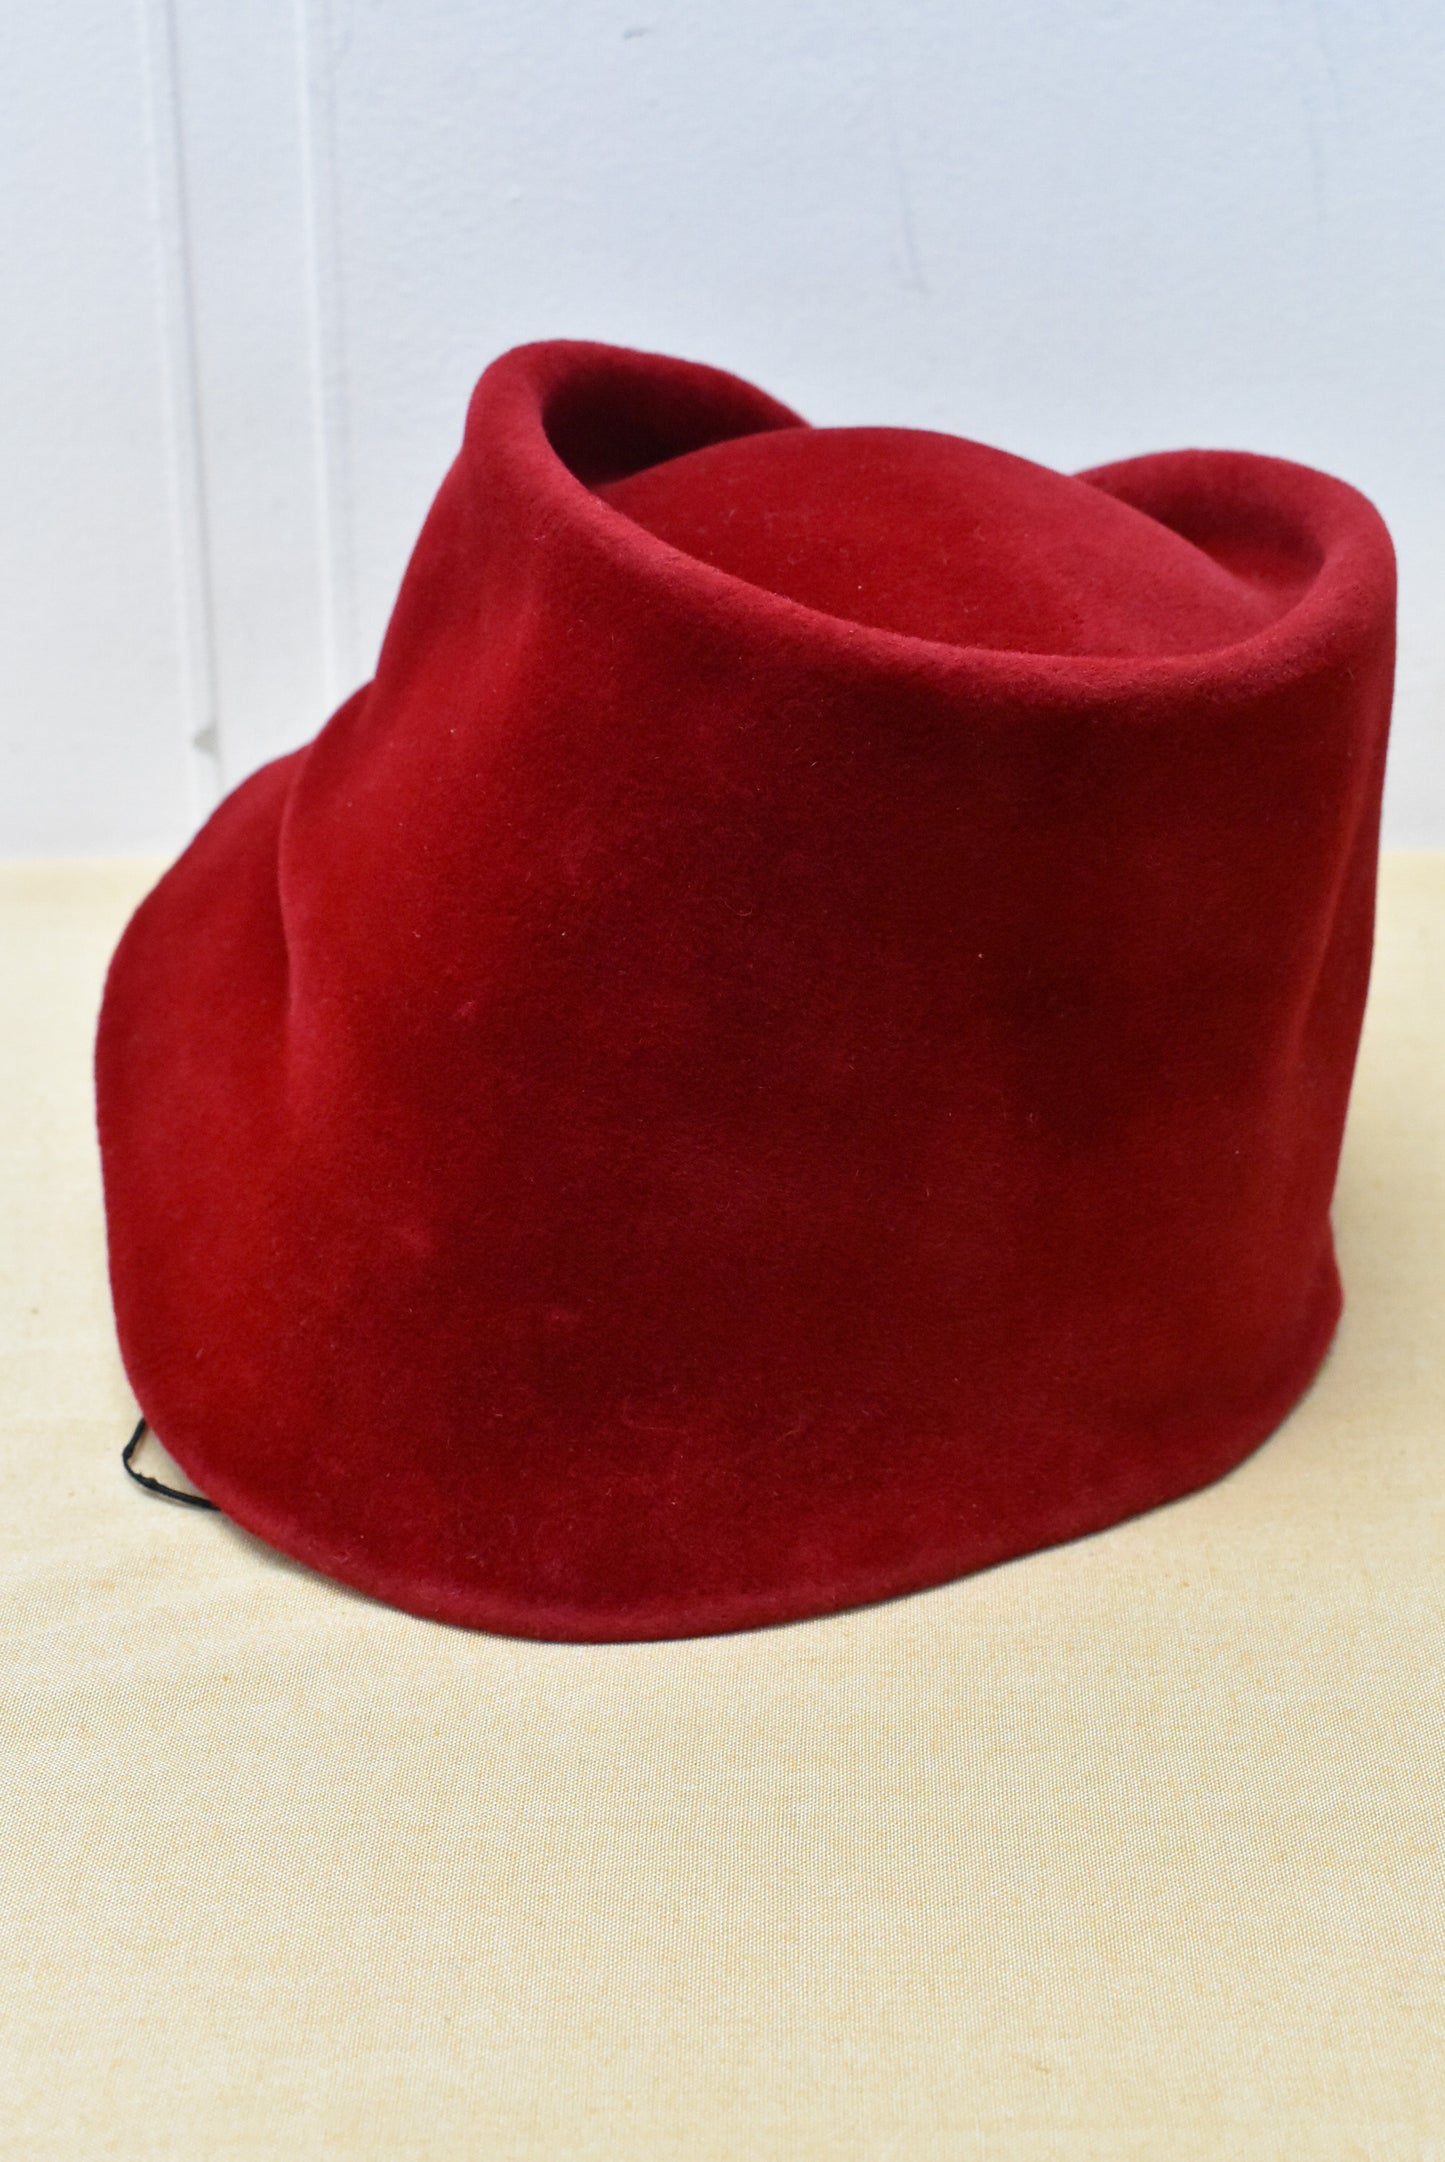 Vintage Knights Millinery NZ rich red velvet hat